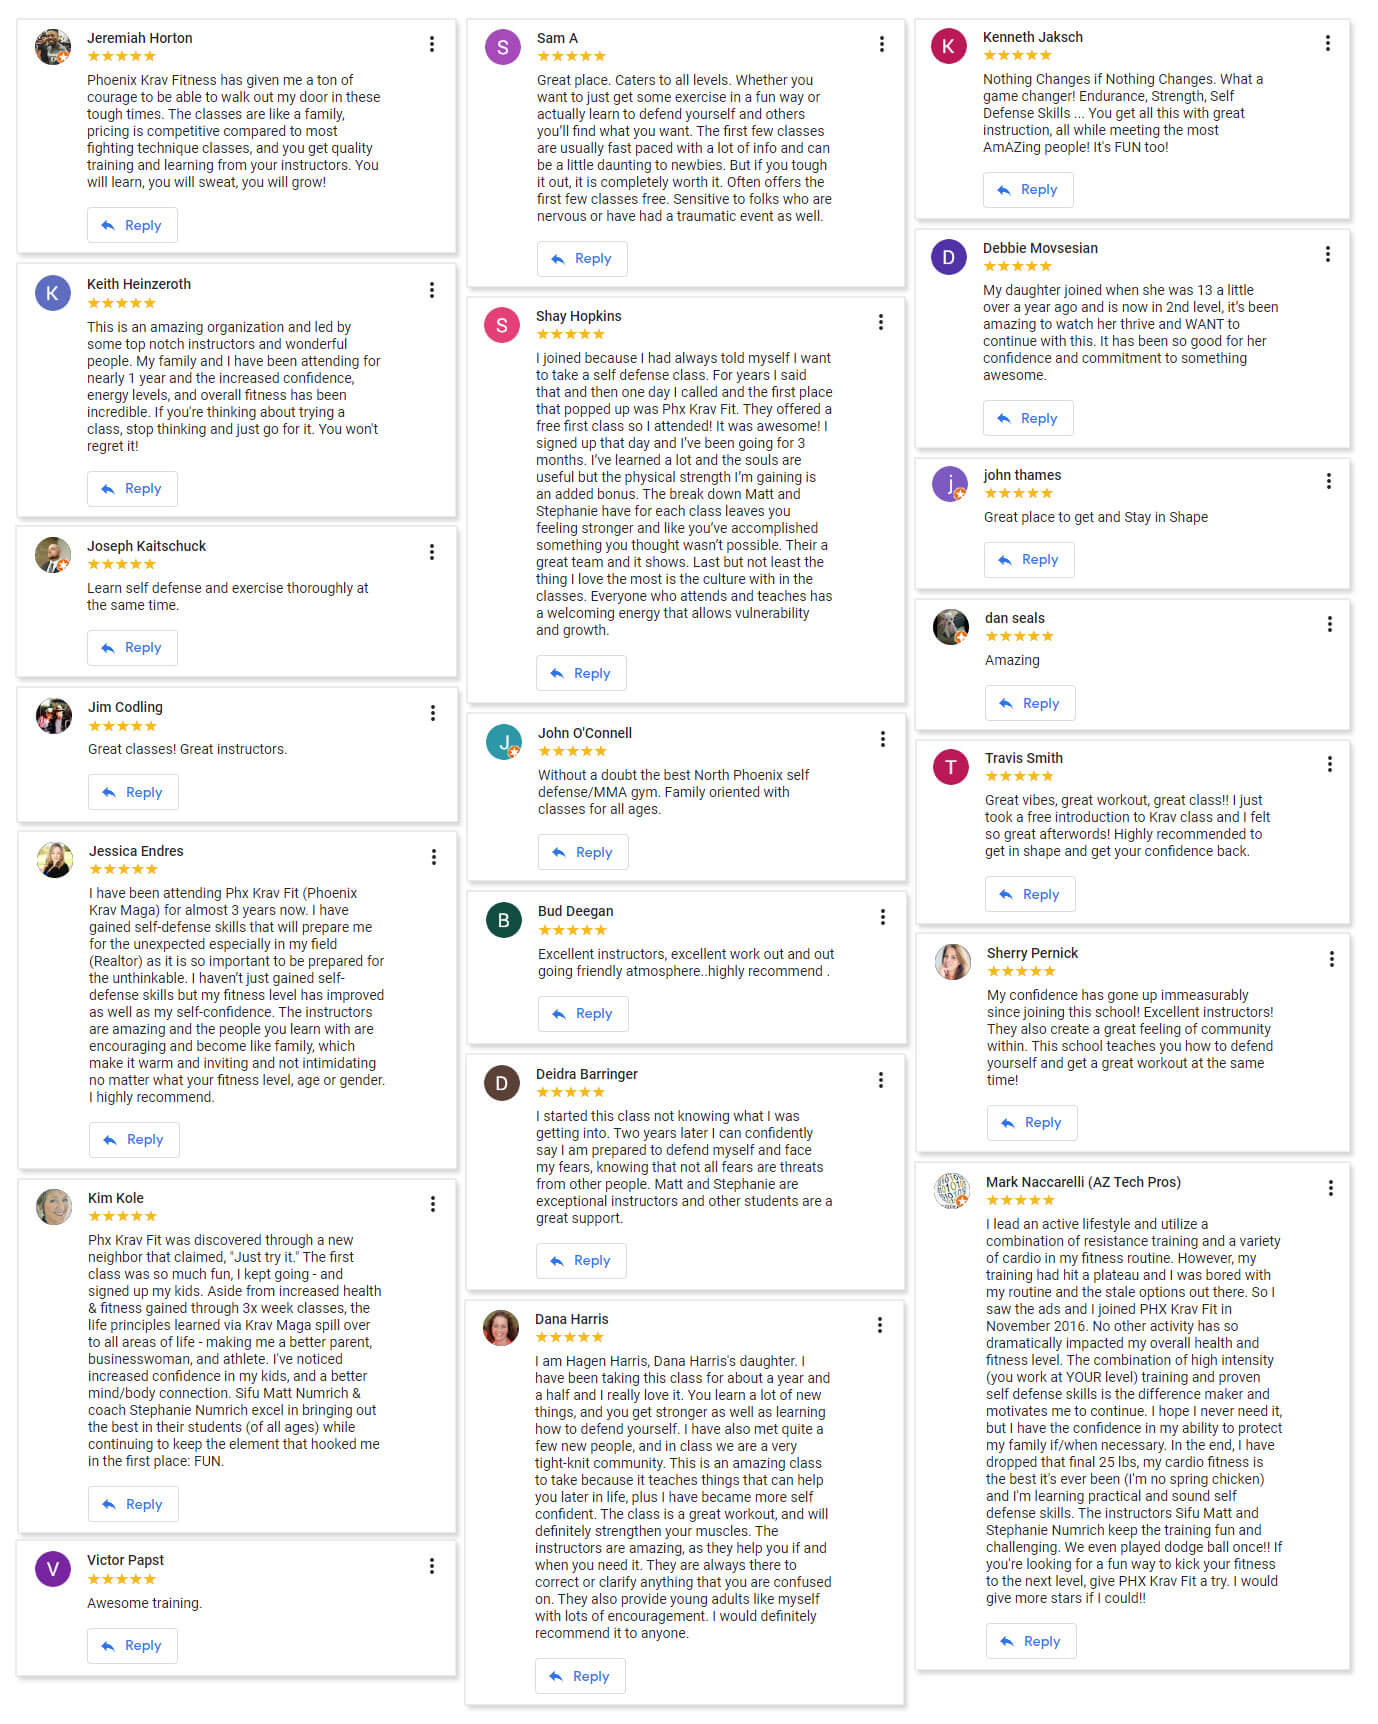 phxkravfit 5 star google reviews